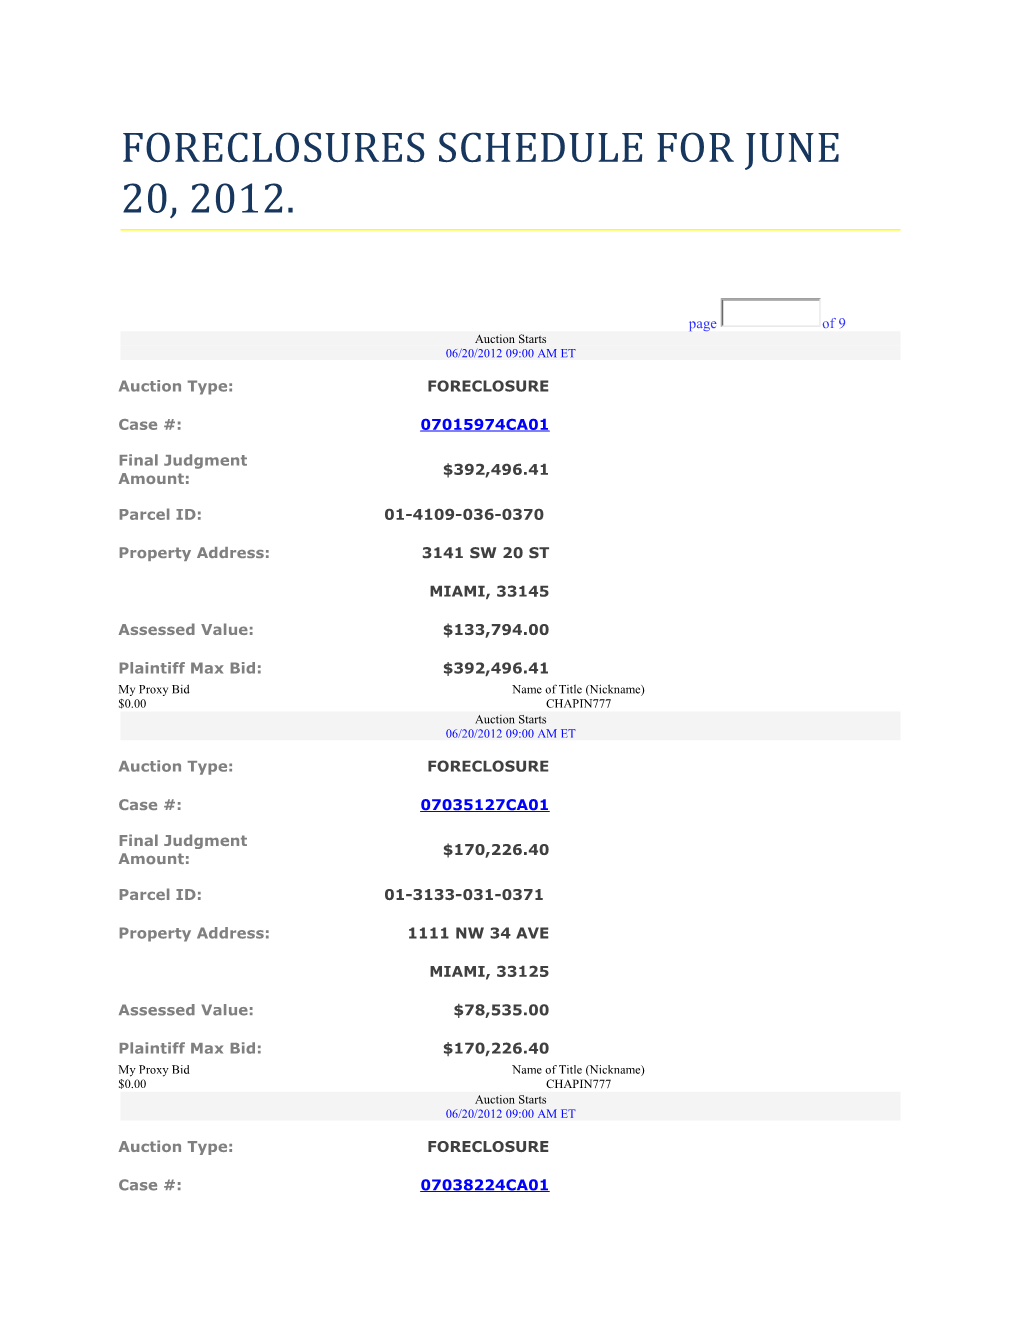 Foreclosures Schedule for June 20, 2012